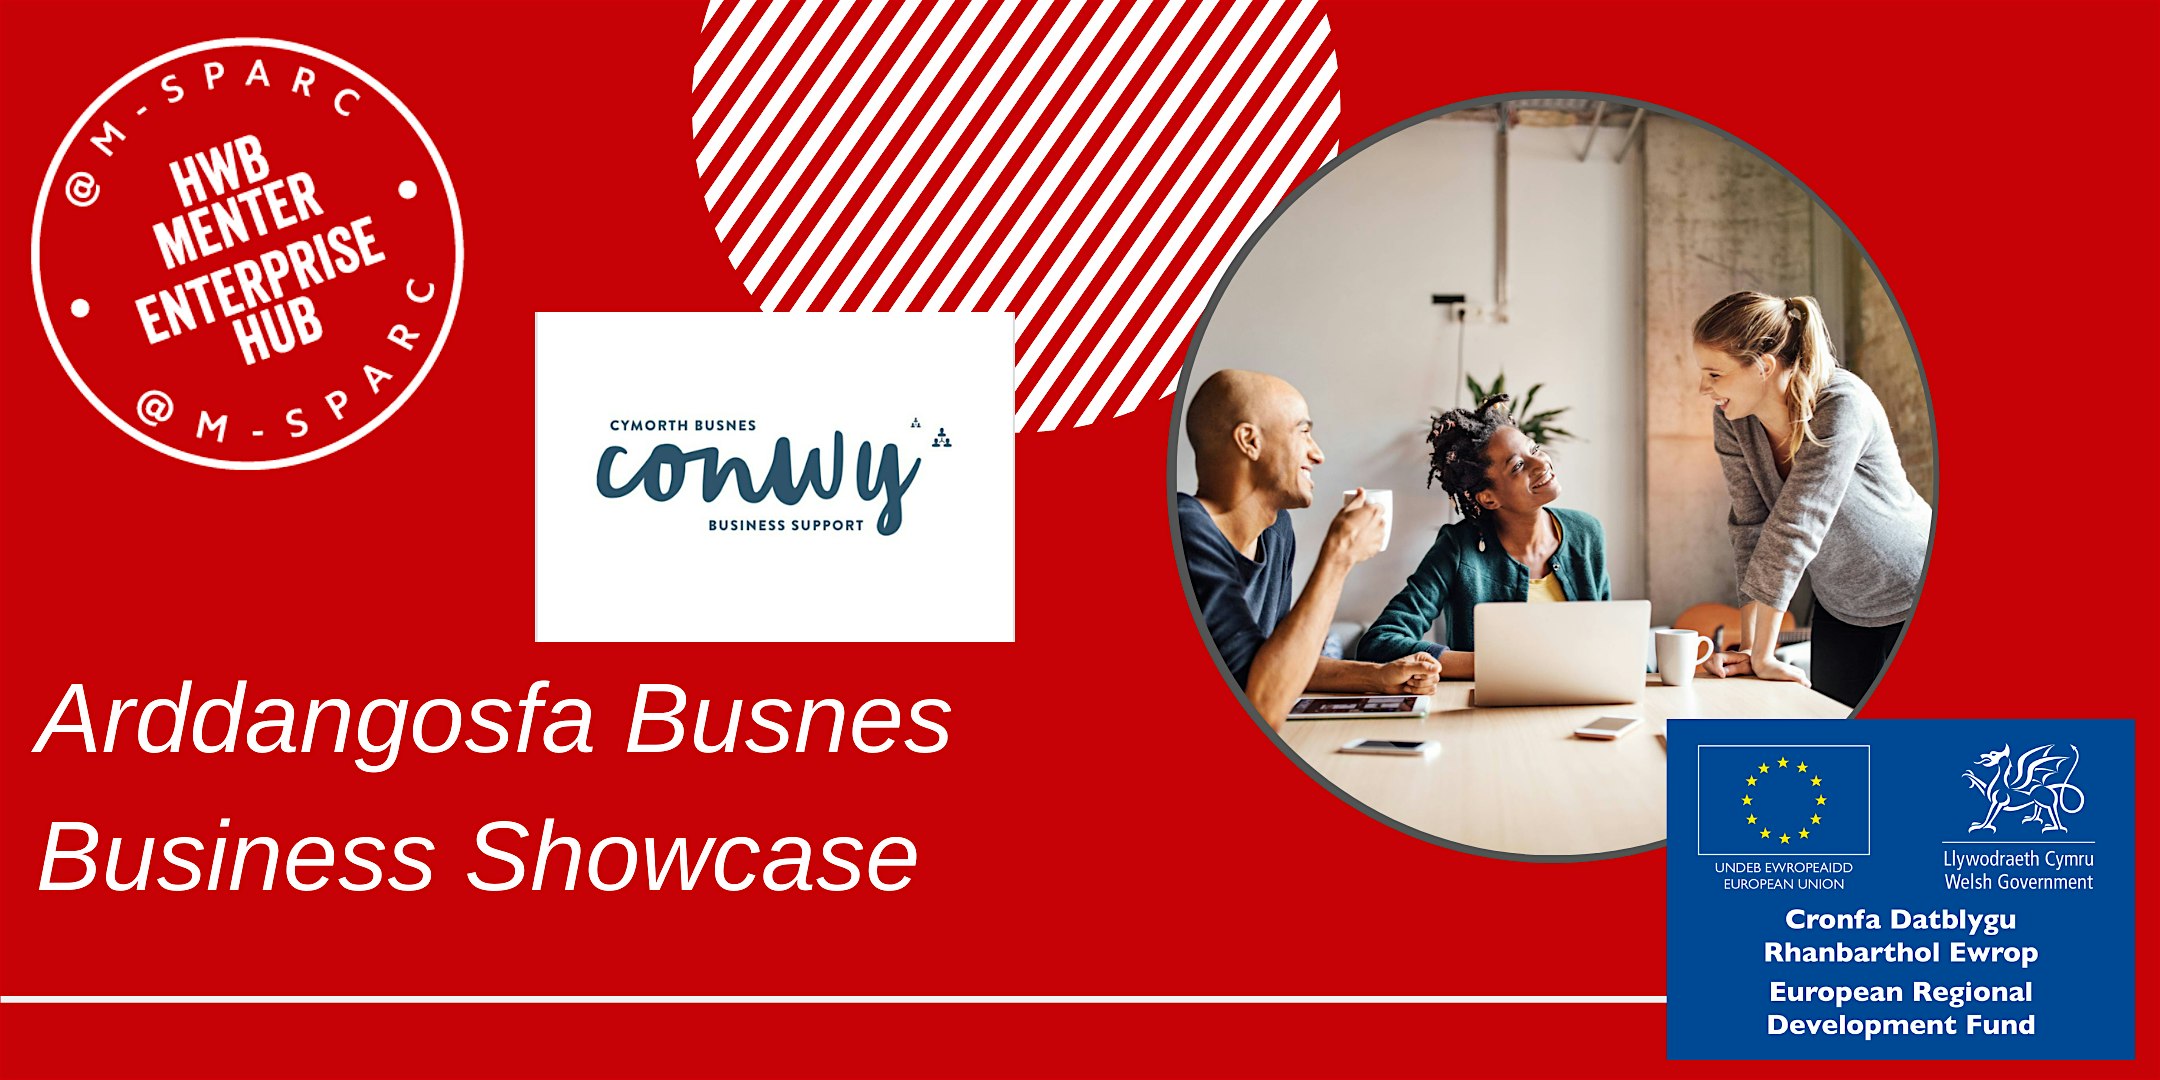 IN PERSON - Arddangosfa  Busnes - Business Showcase